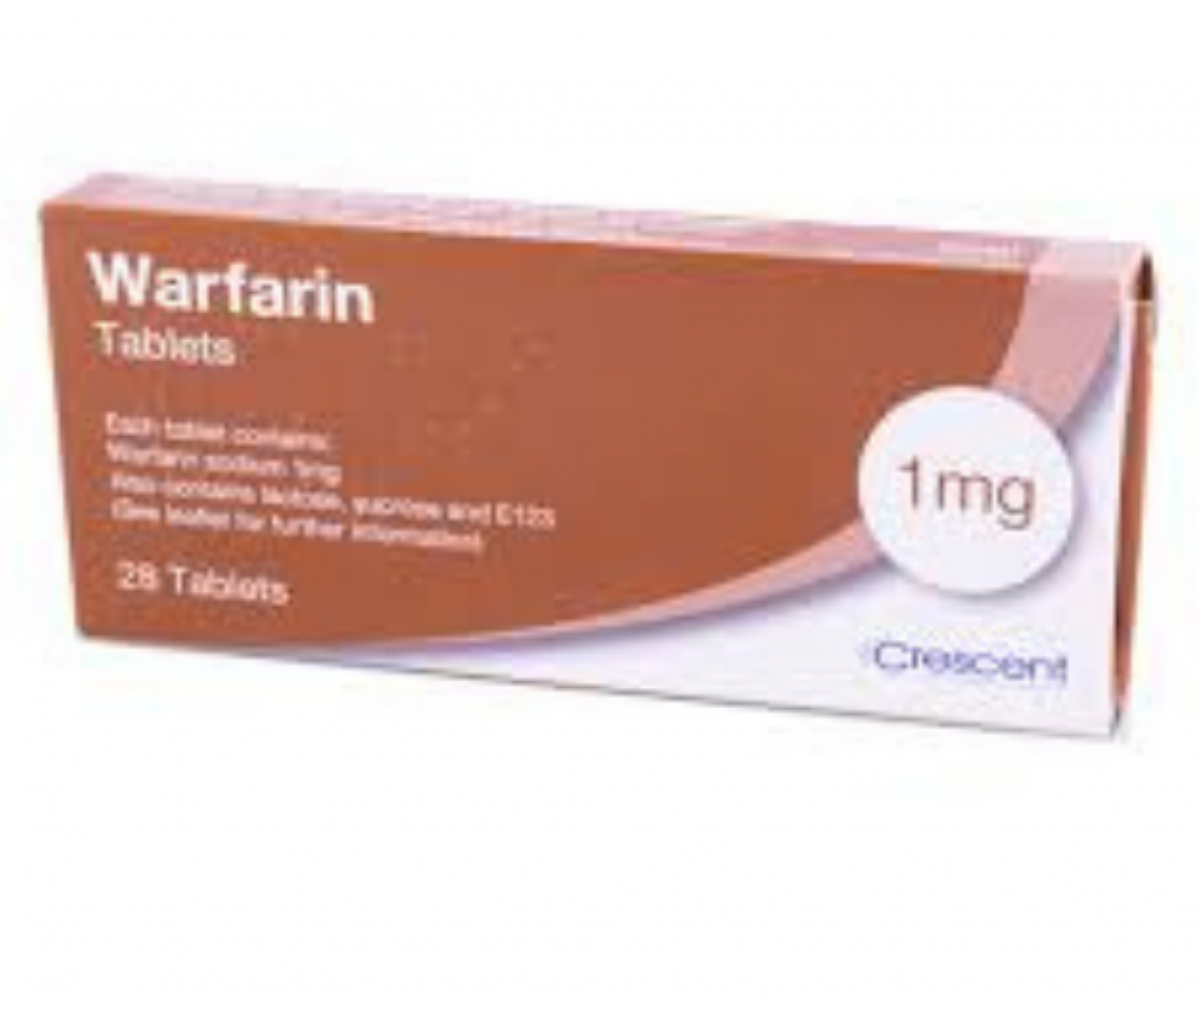 Crescent Warfarin 1mg Tablet 28's